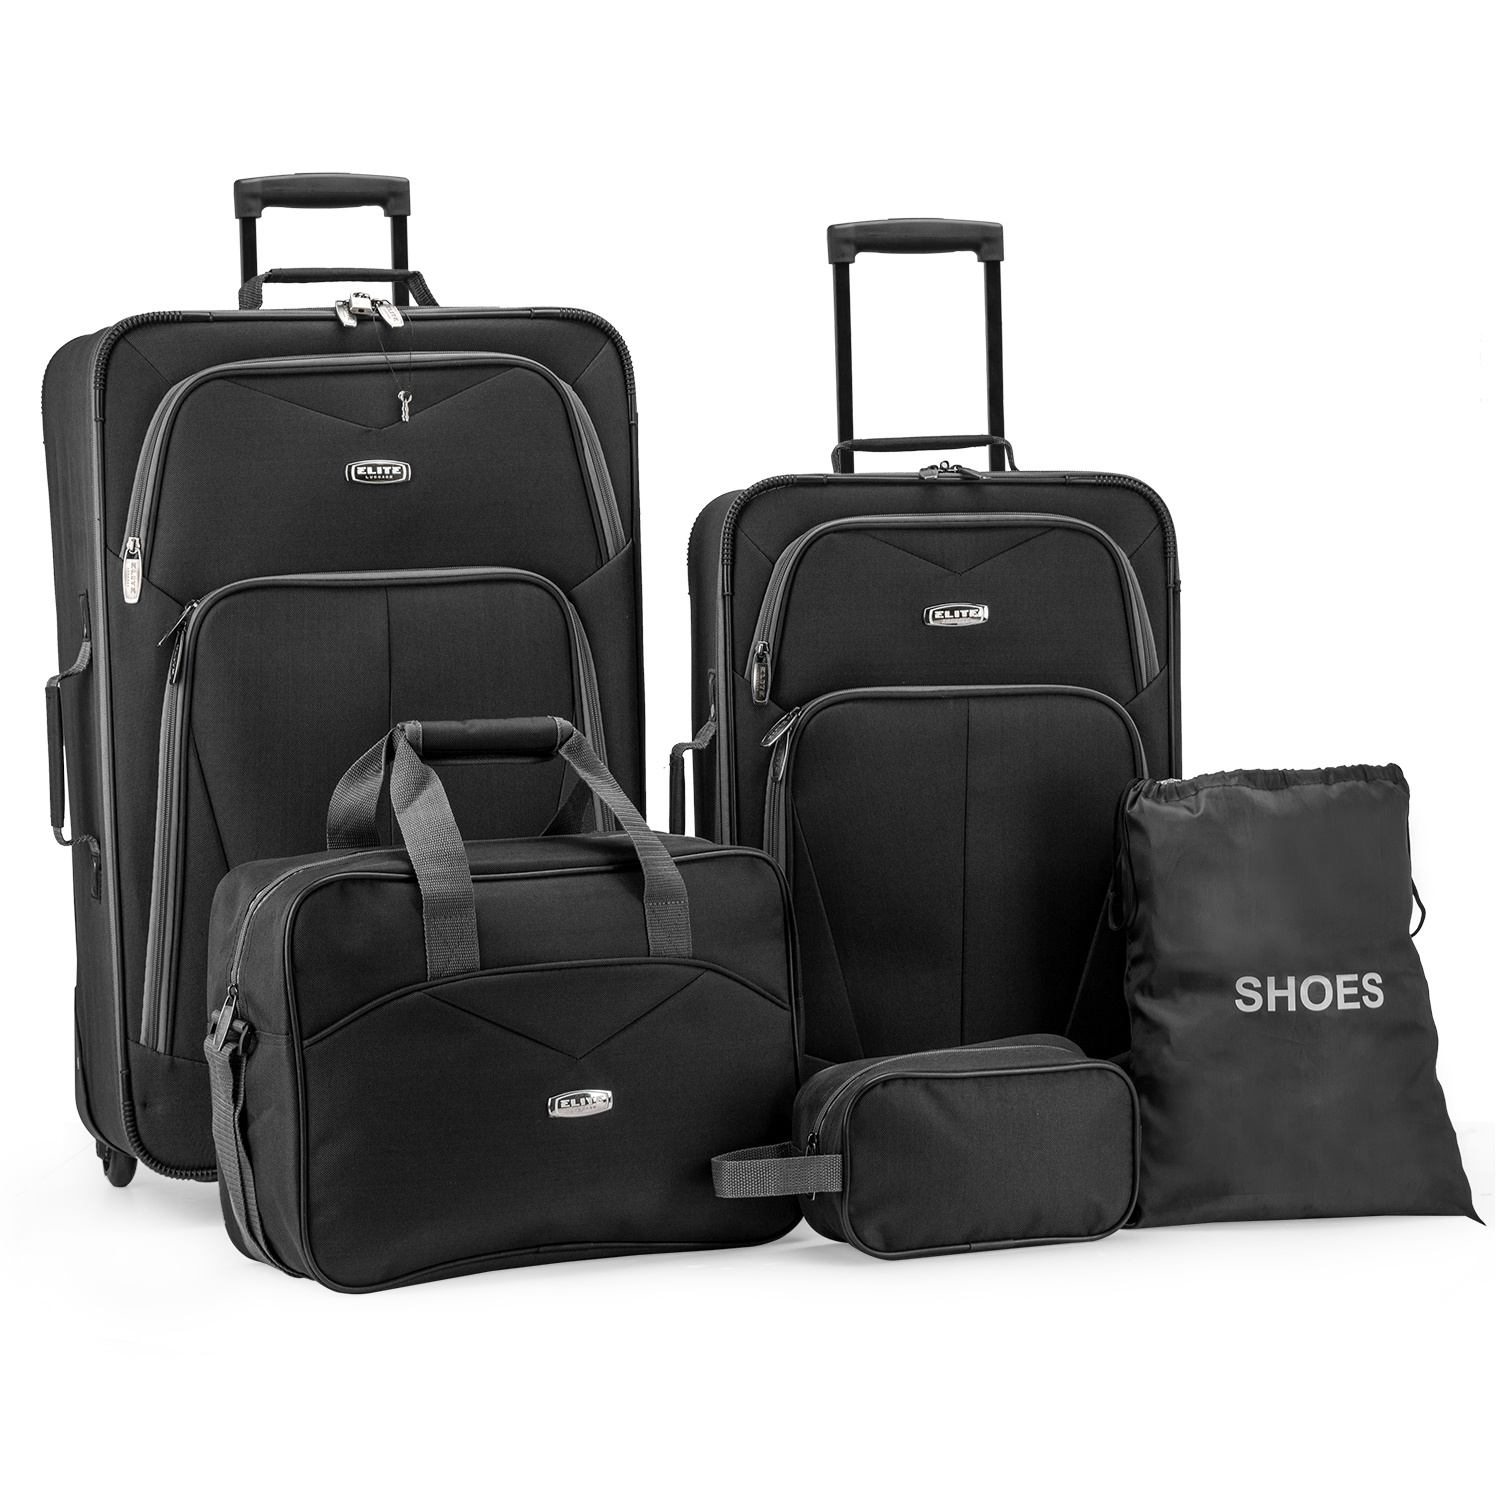 Elite Luggage Whitfield 5-Piece Softside Lightweight Rolling Luggage Set, Black - image 1 of 15